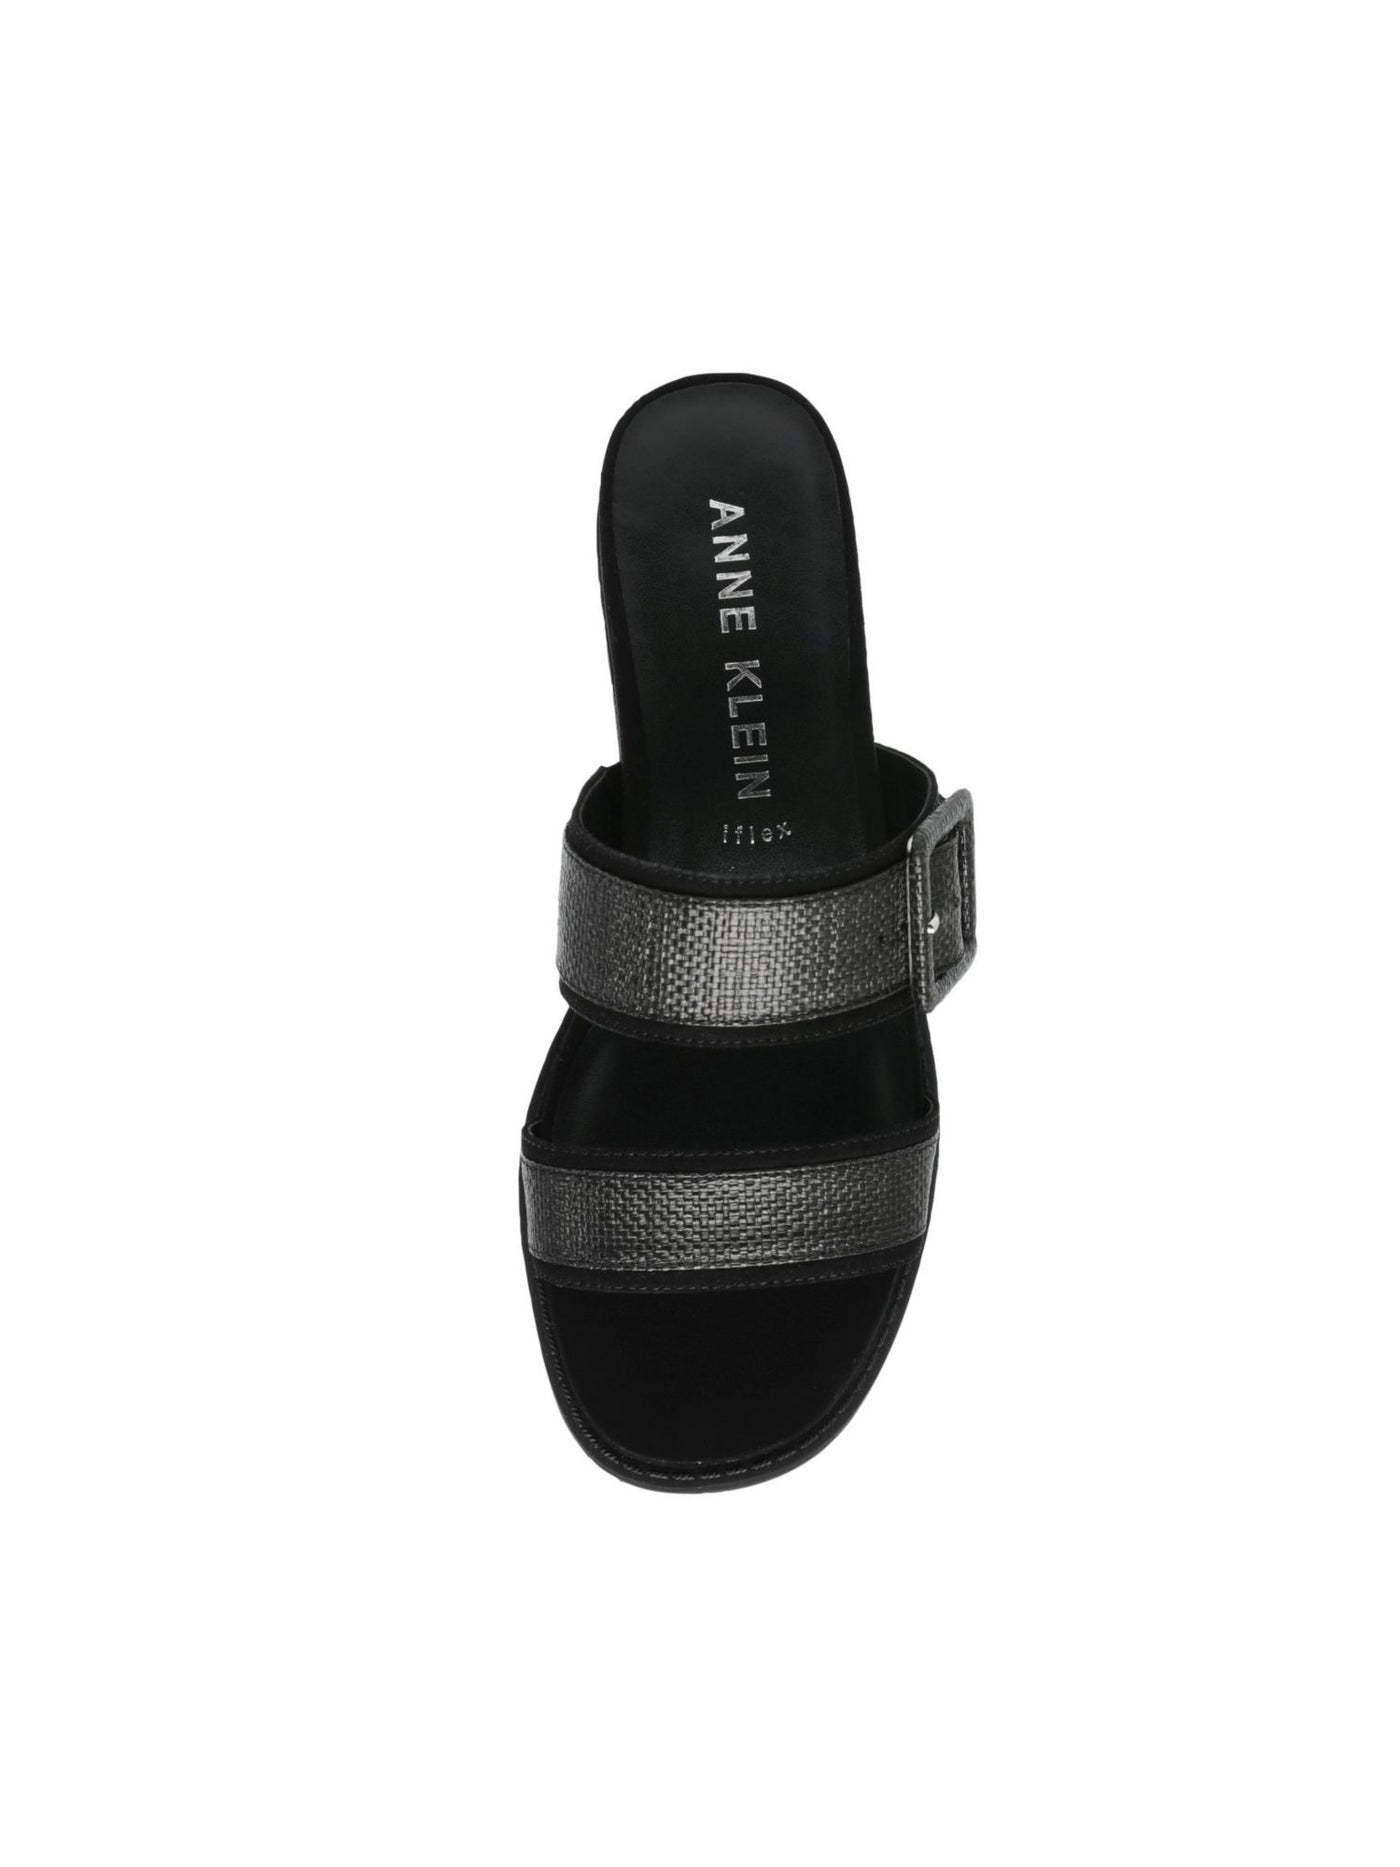 ANNE KLEIN Womens Black Buckle Accent Comfort Brenda Round Toe Wedge Slip On Slide Sandals Shoes 6.5 M